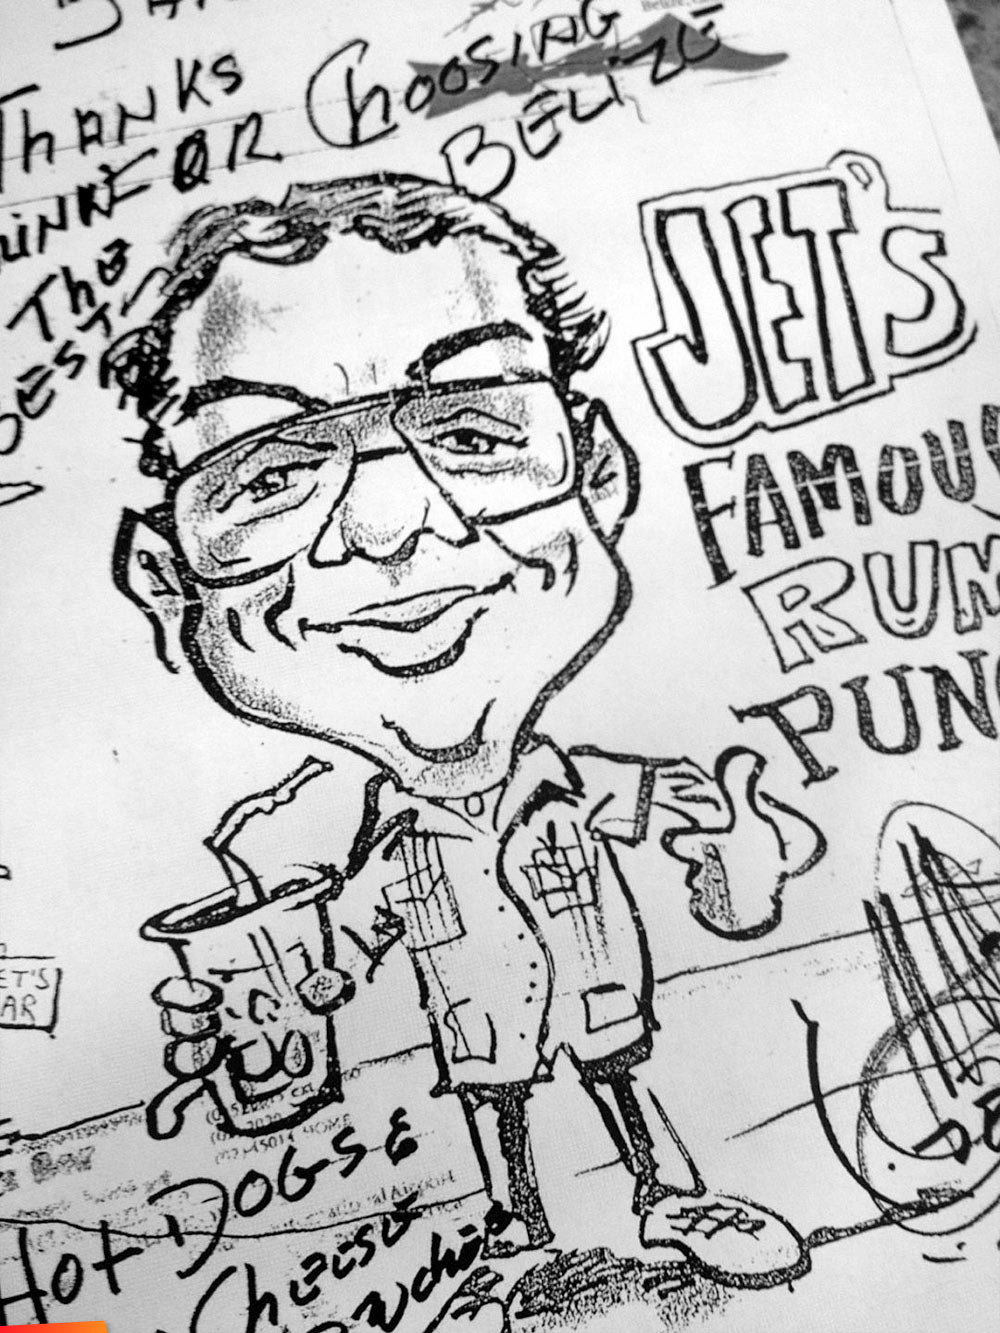 Cartoon of Jet of Jet's Bar in Philip Goldson International Airport